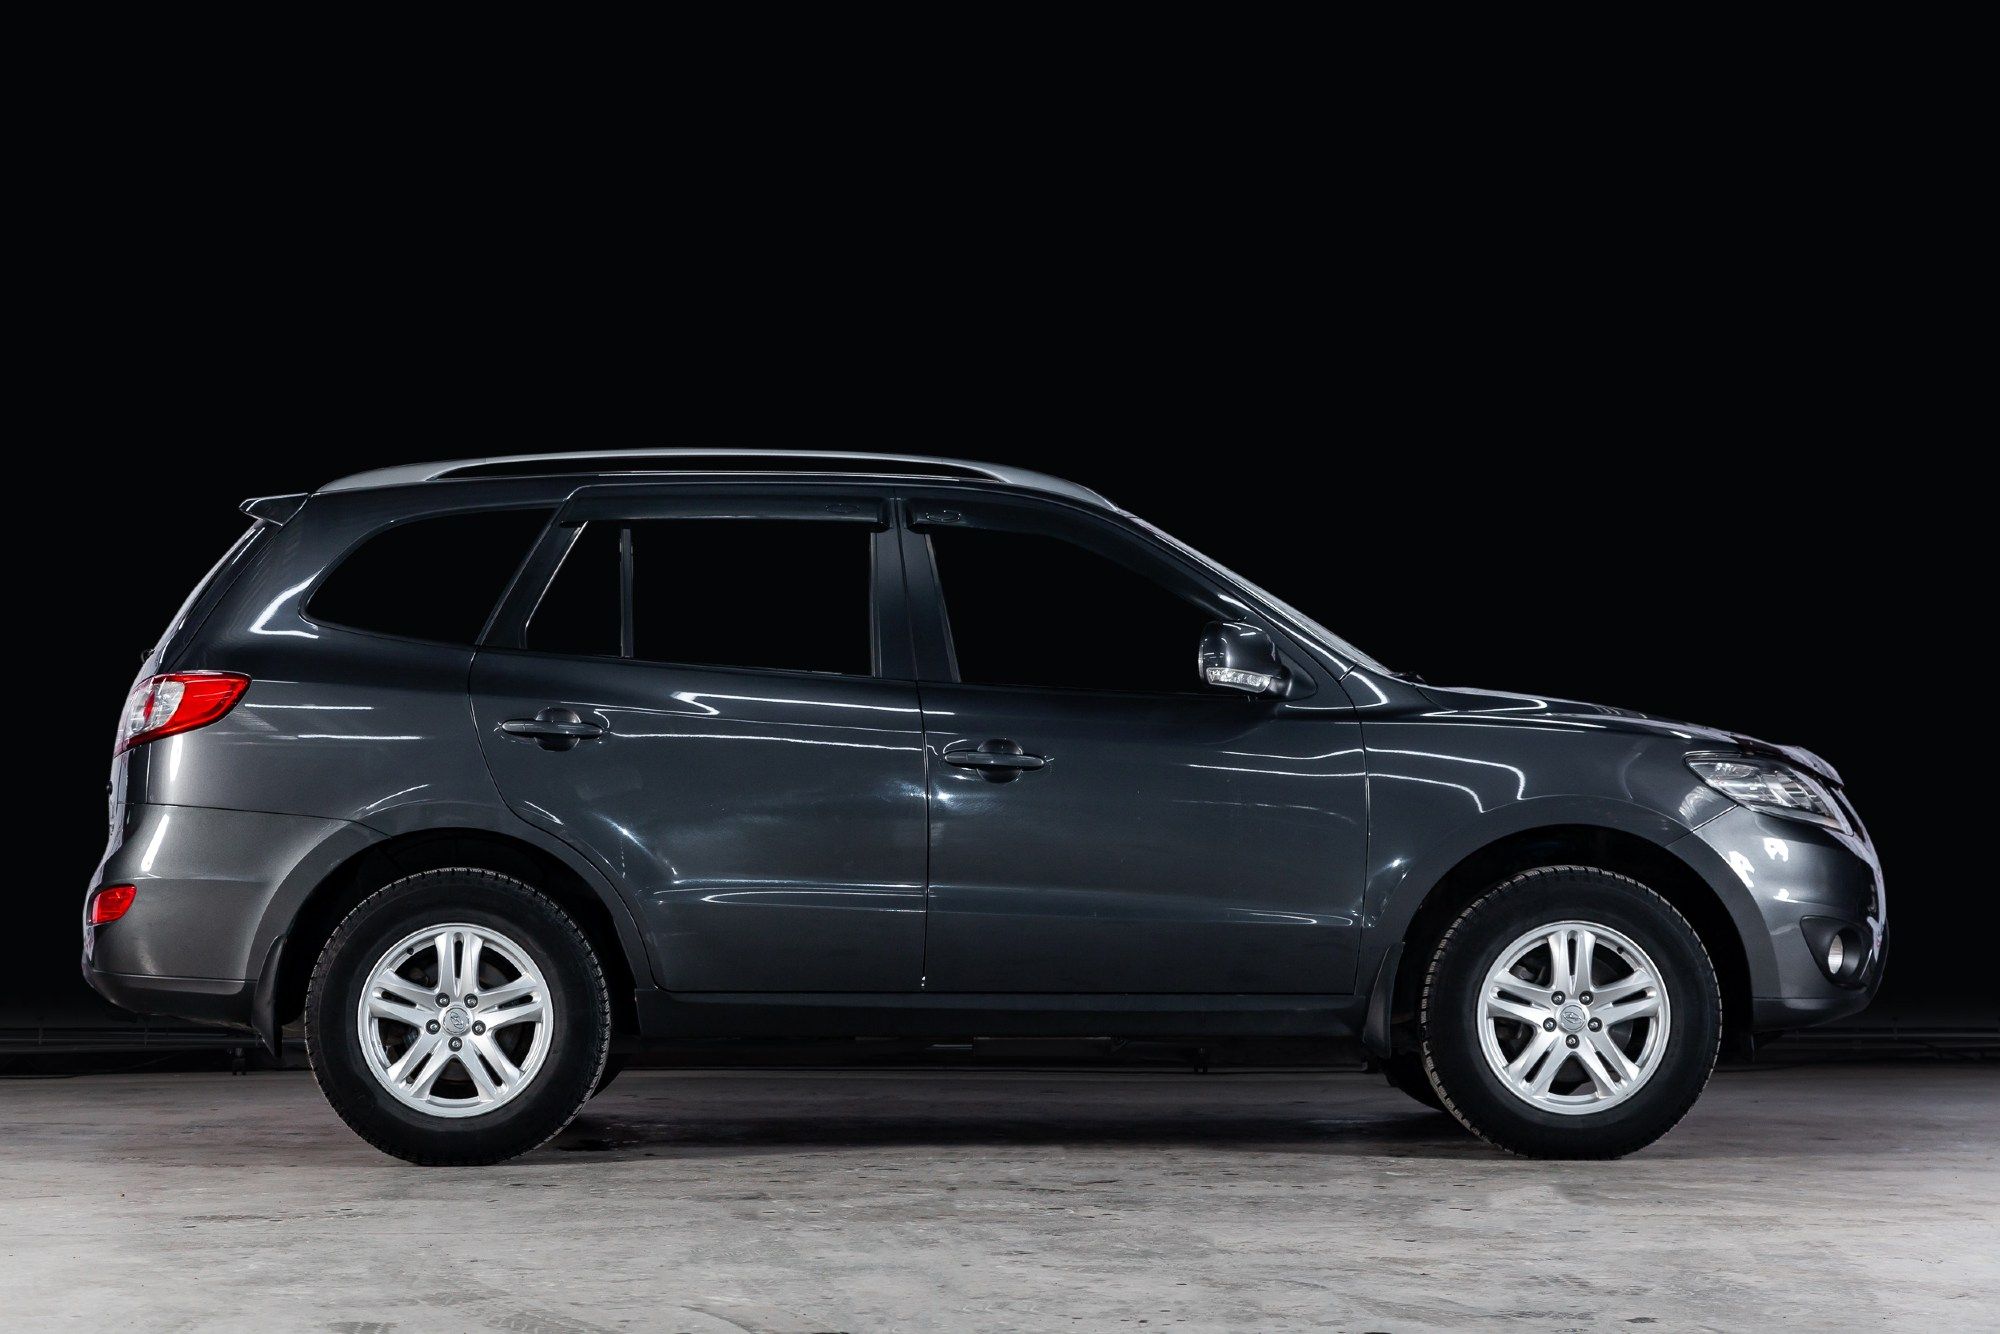 Side view of a dark grey Hyundai Santa Fe - Hyundai recall